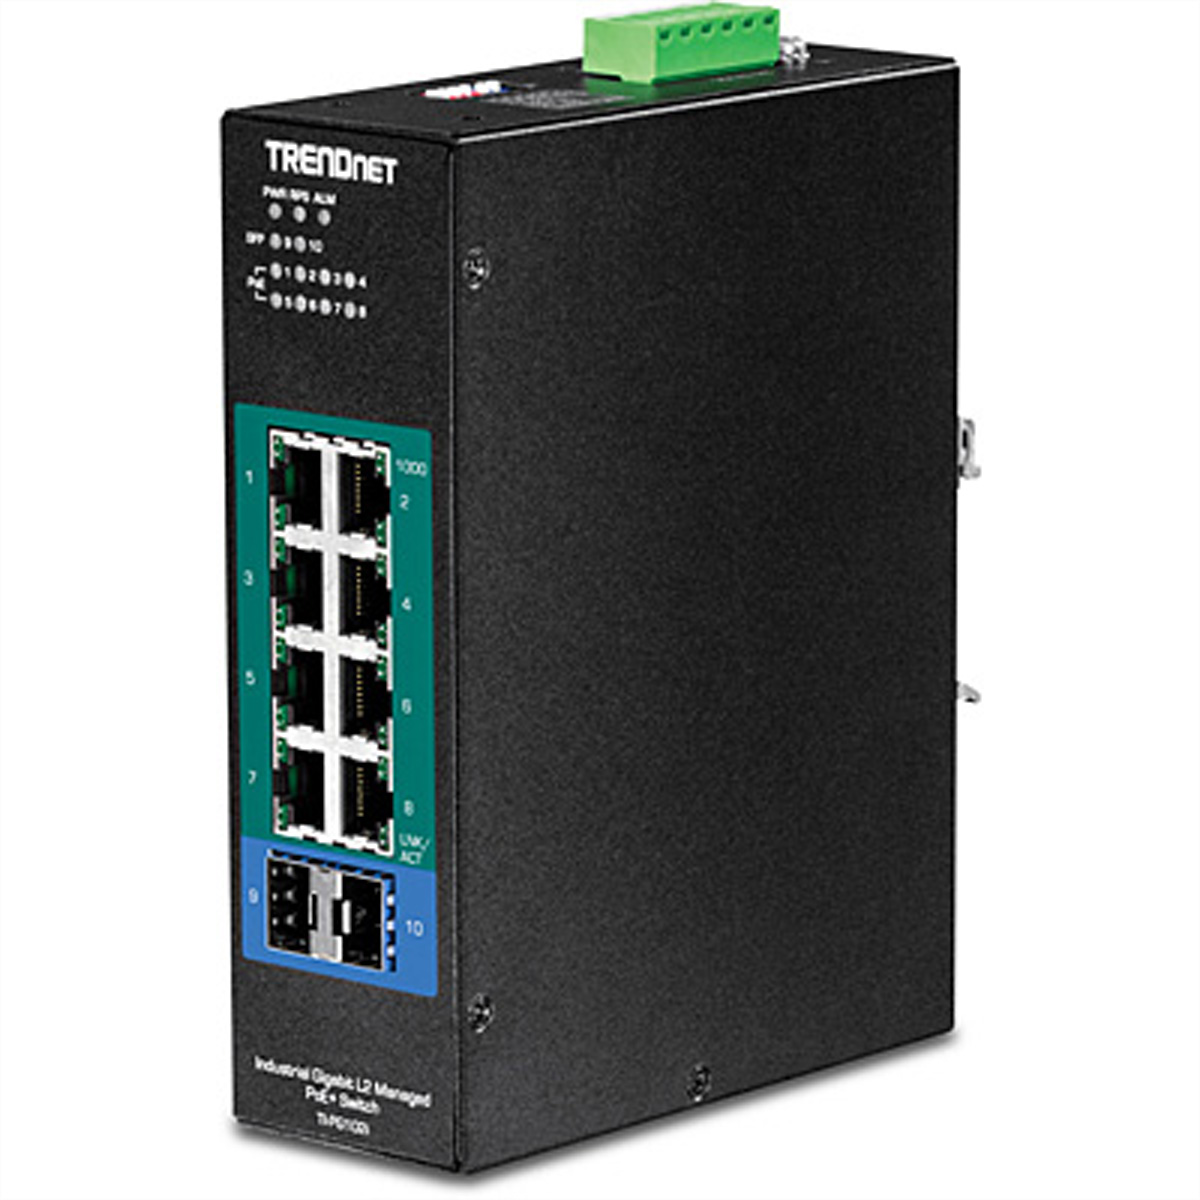 10-Port TRENDNET Industrial Gigabit Managed TI-PG102i PoE+ Networking Switch DIN-Rail Industrial